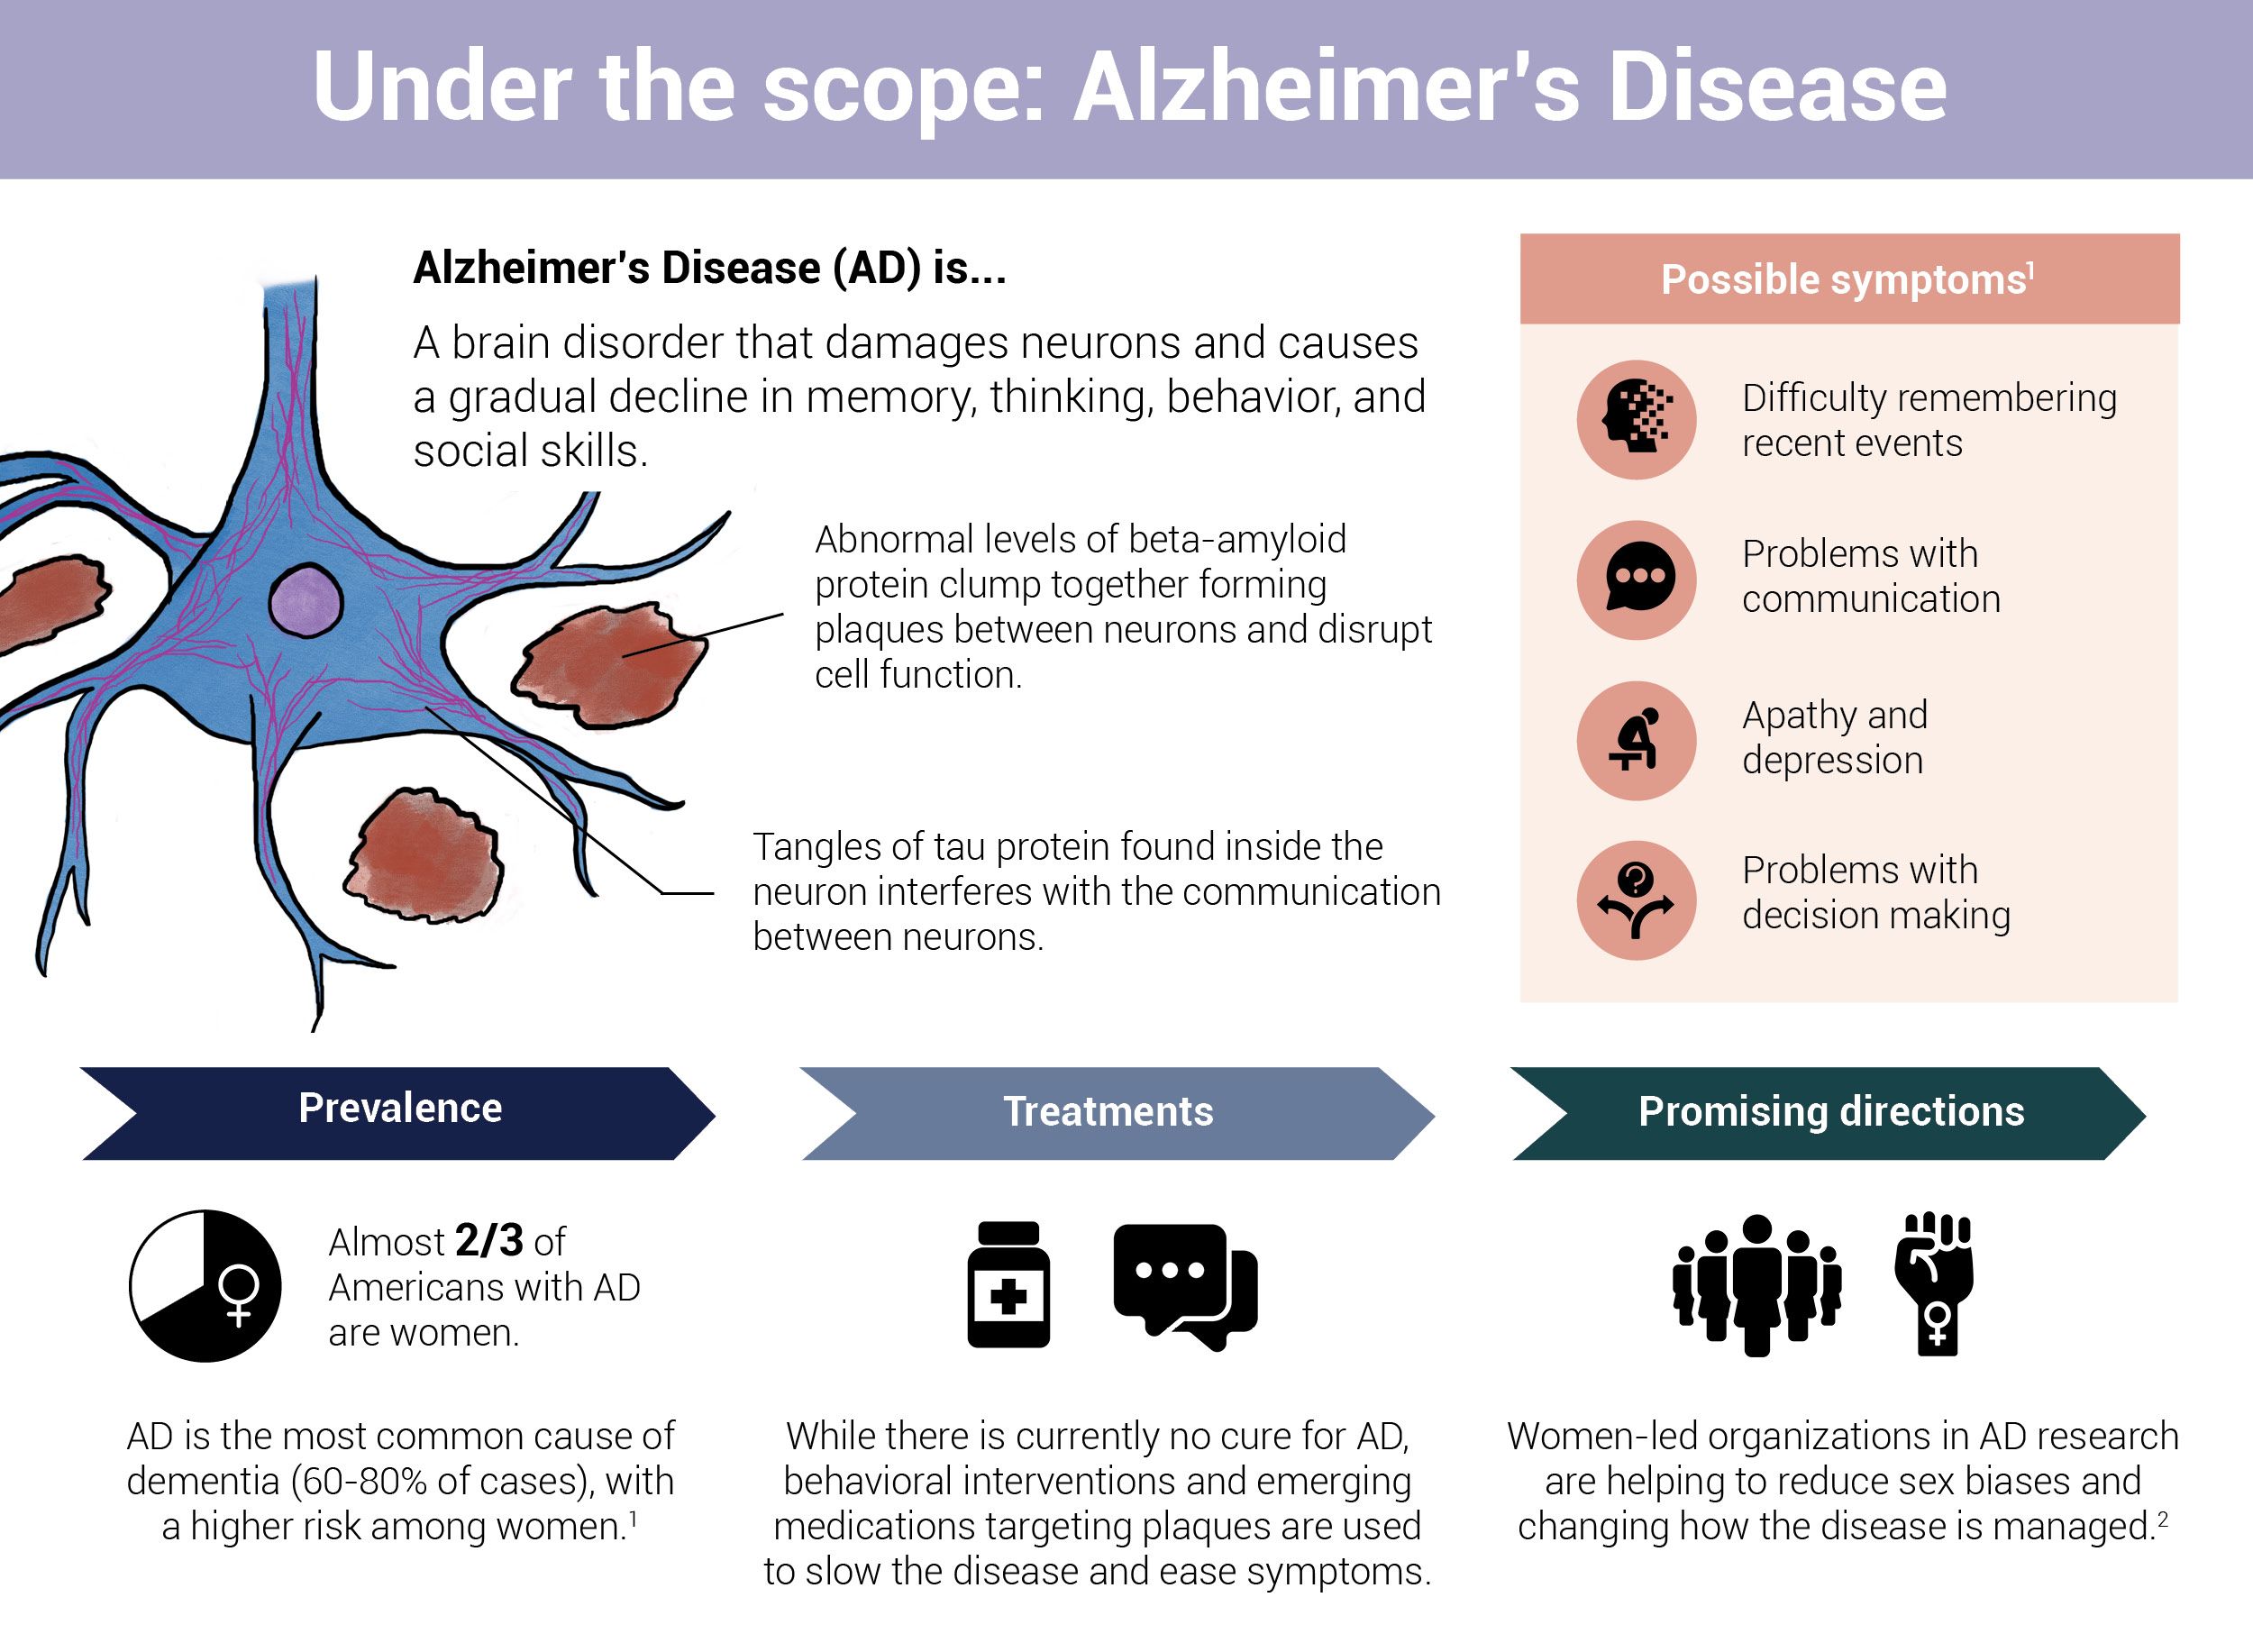 An infographic about Alzheimer's disease